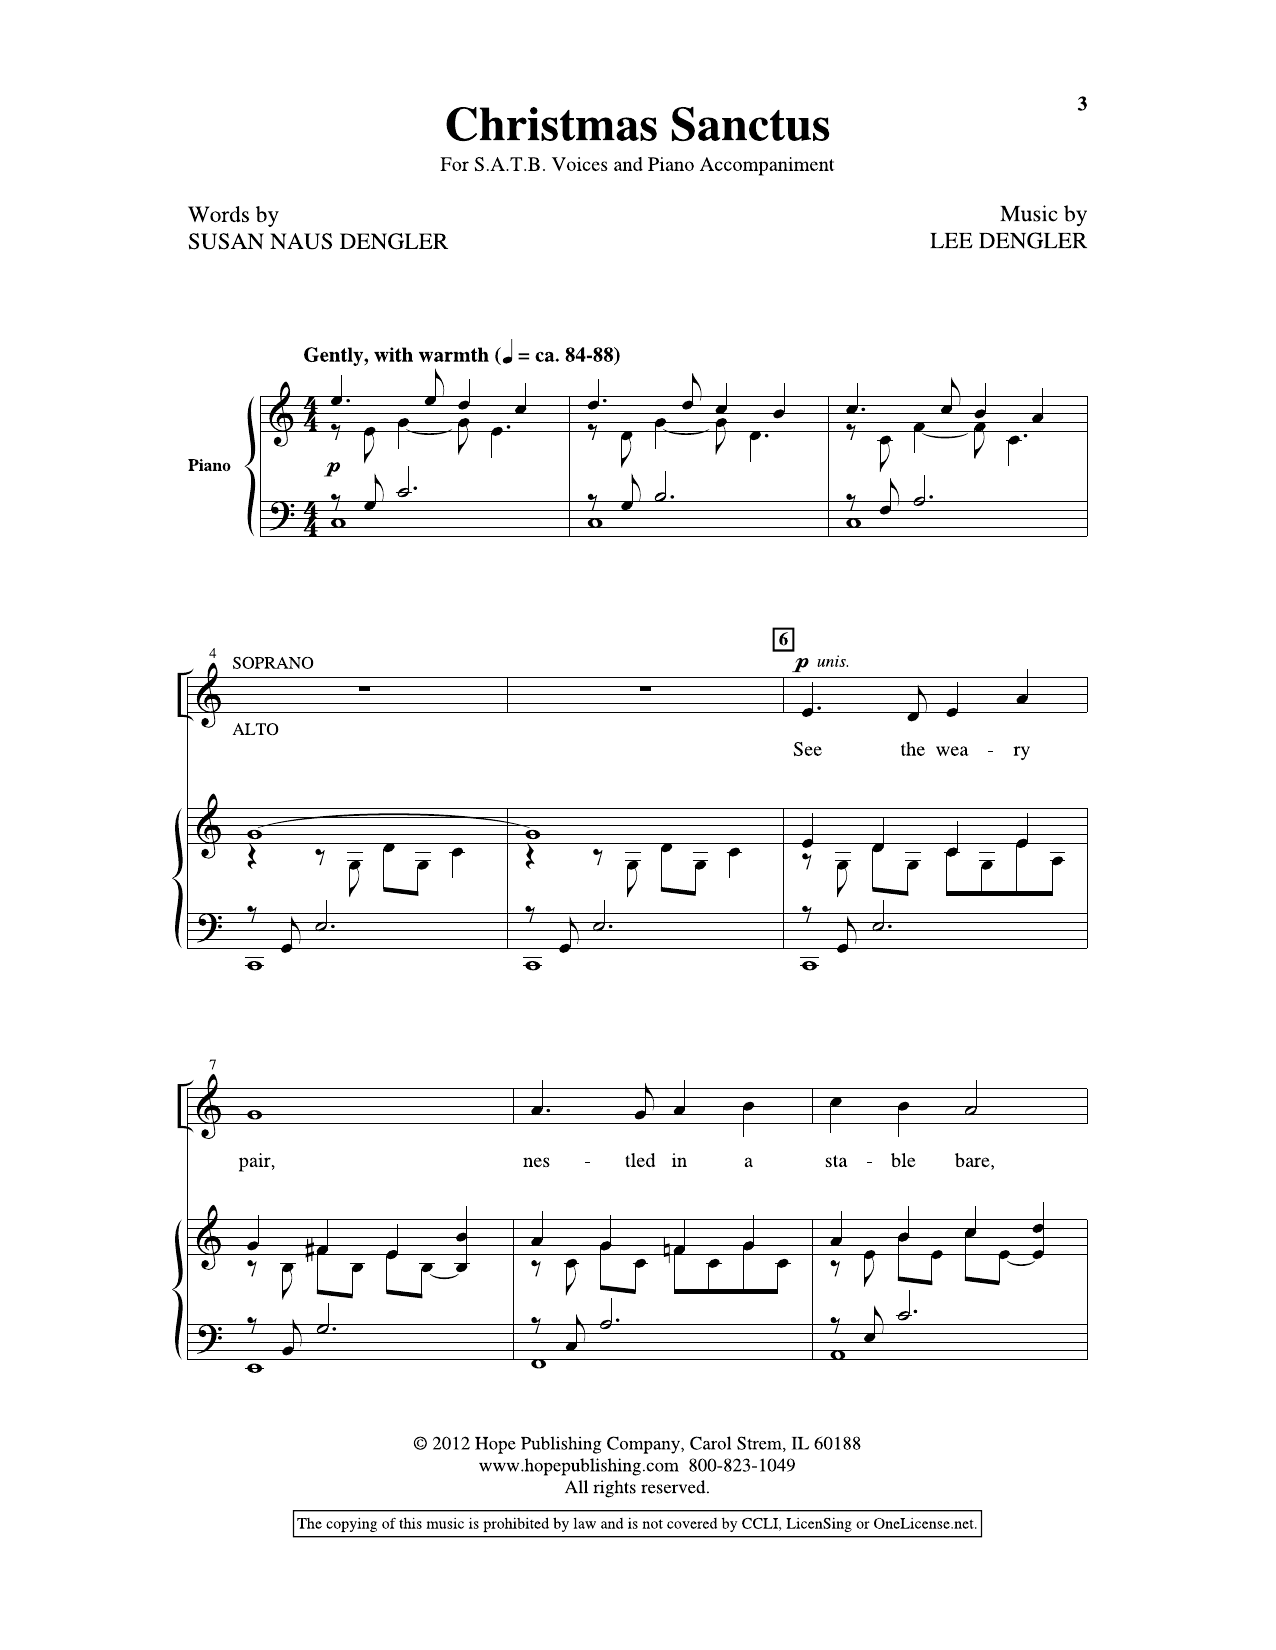 Lee Dengler Christmas Sanctus Sheet Music Notes & Chords for Choir - Download or Print PDF